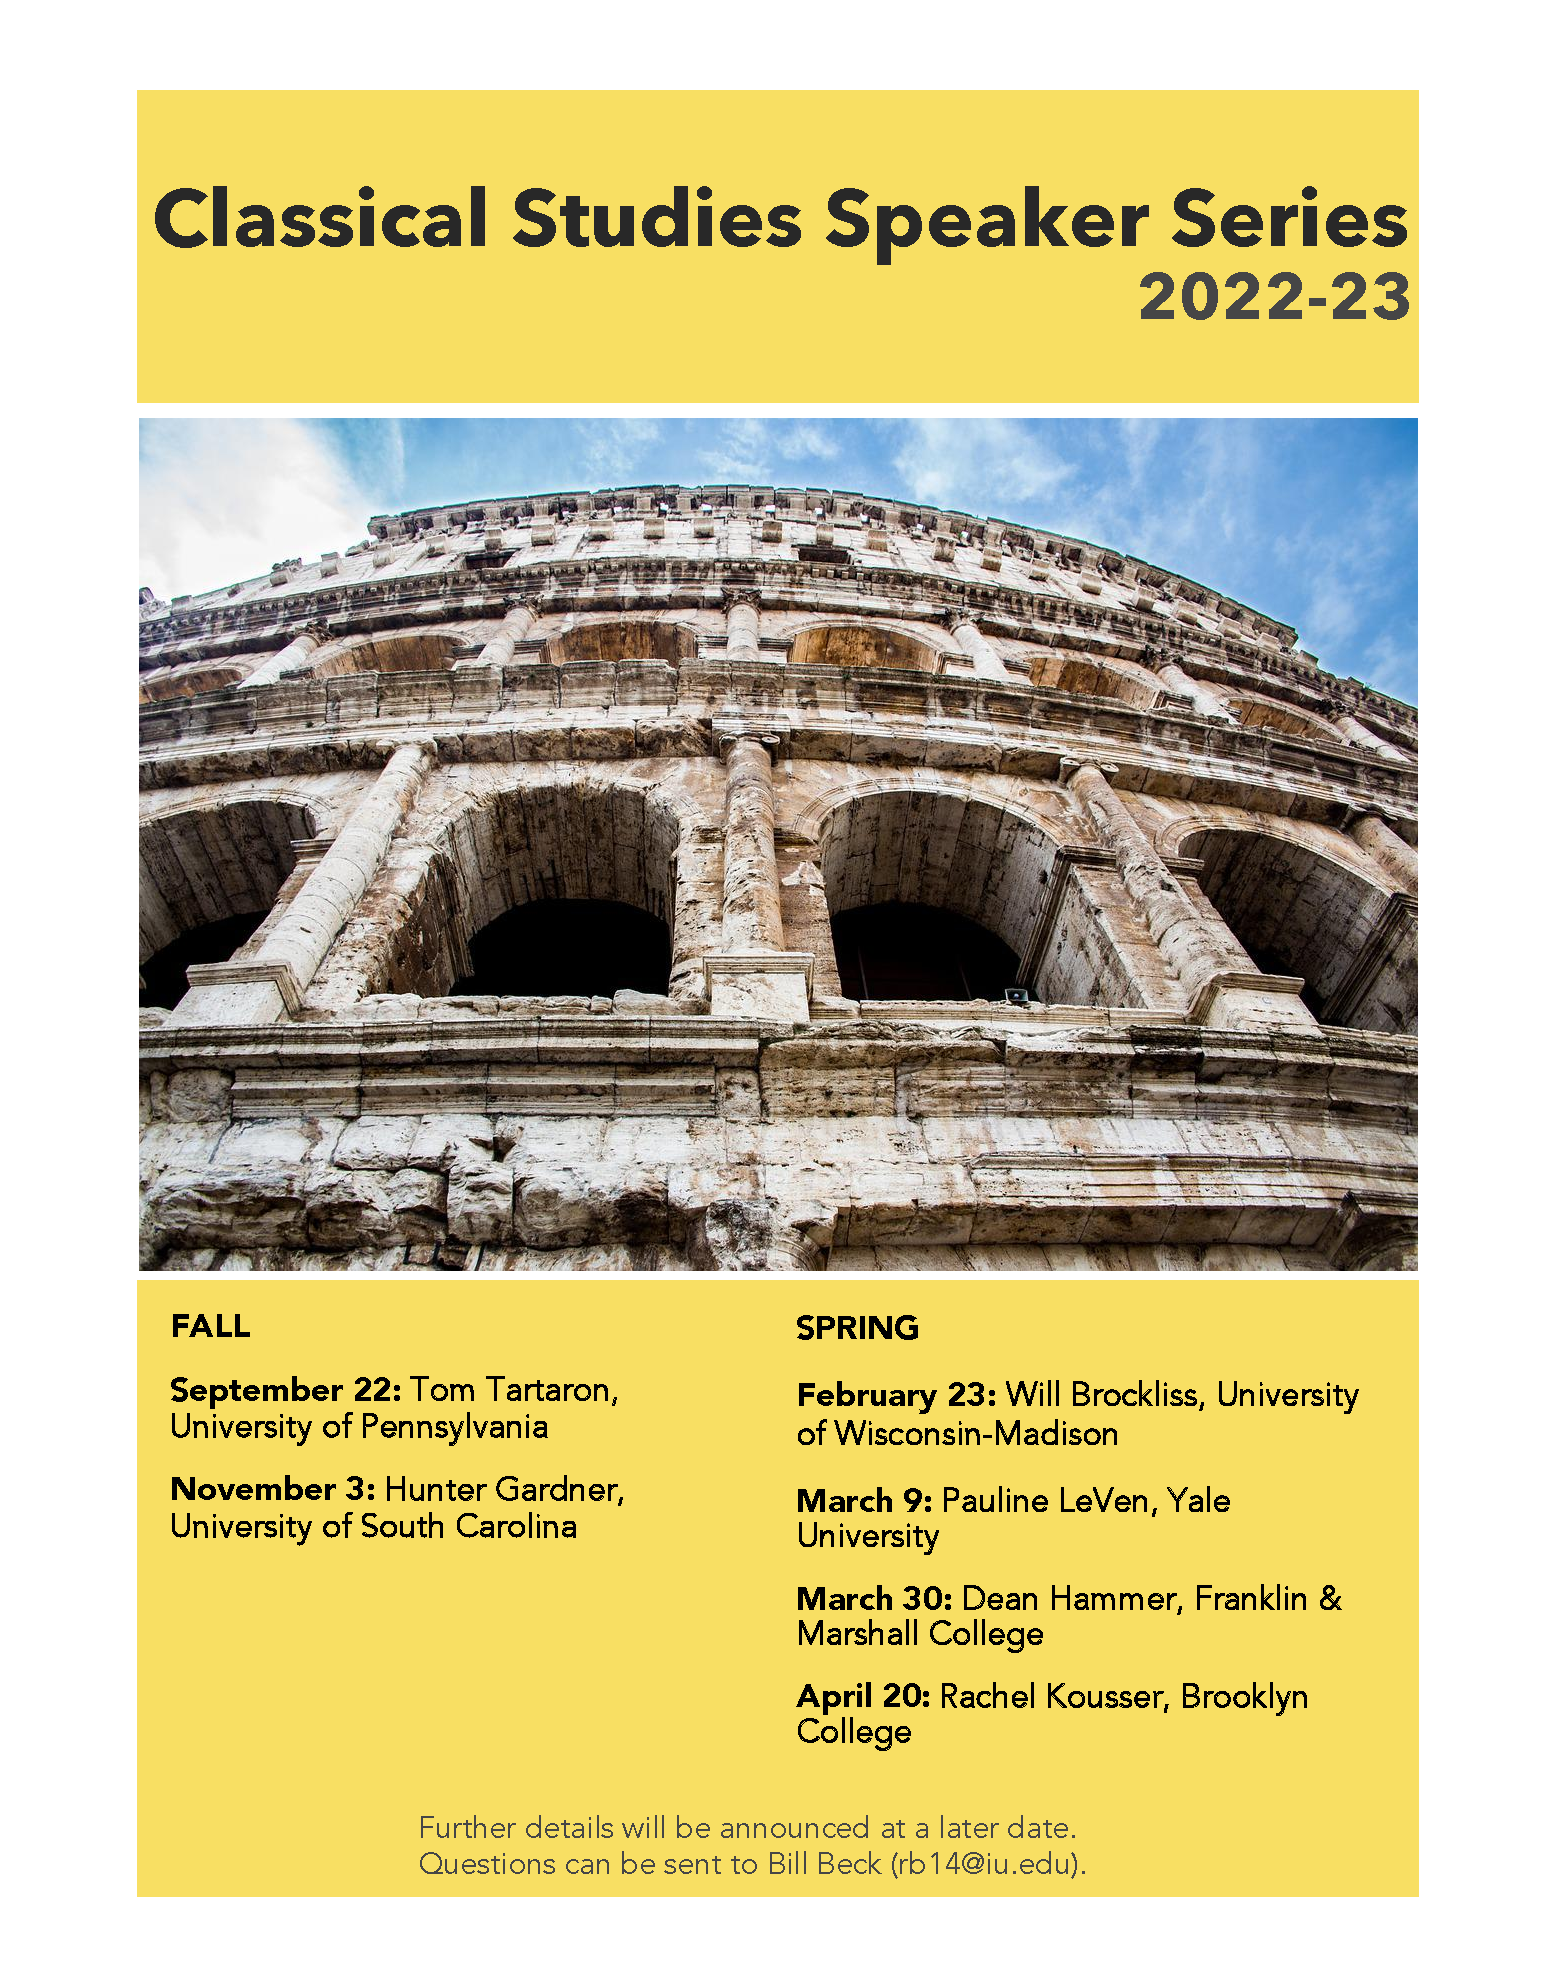 Classical-Studies-Speaker-Series-2022-23-Flyer.png